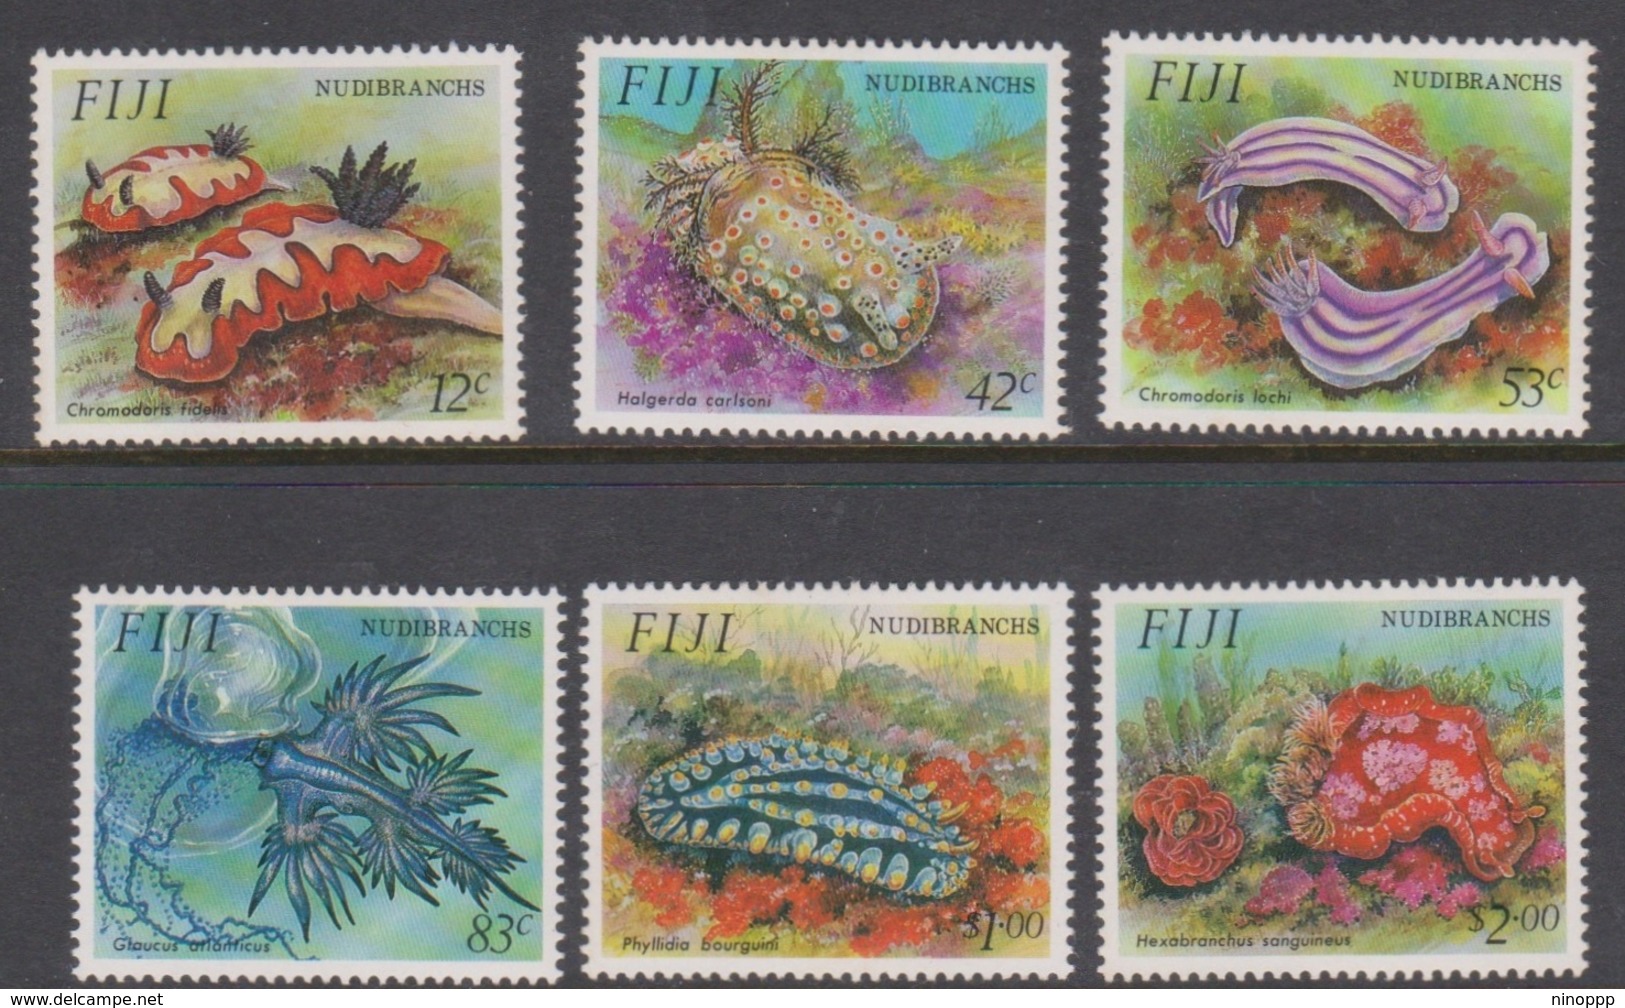 Fiji SG 878-883 1993 Nudibranch, Mint Never Hinged - Fiji (1970-...)